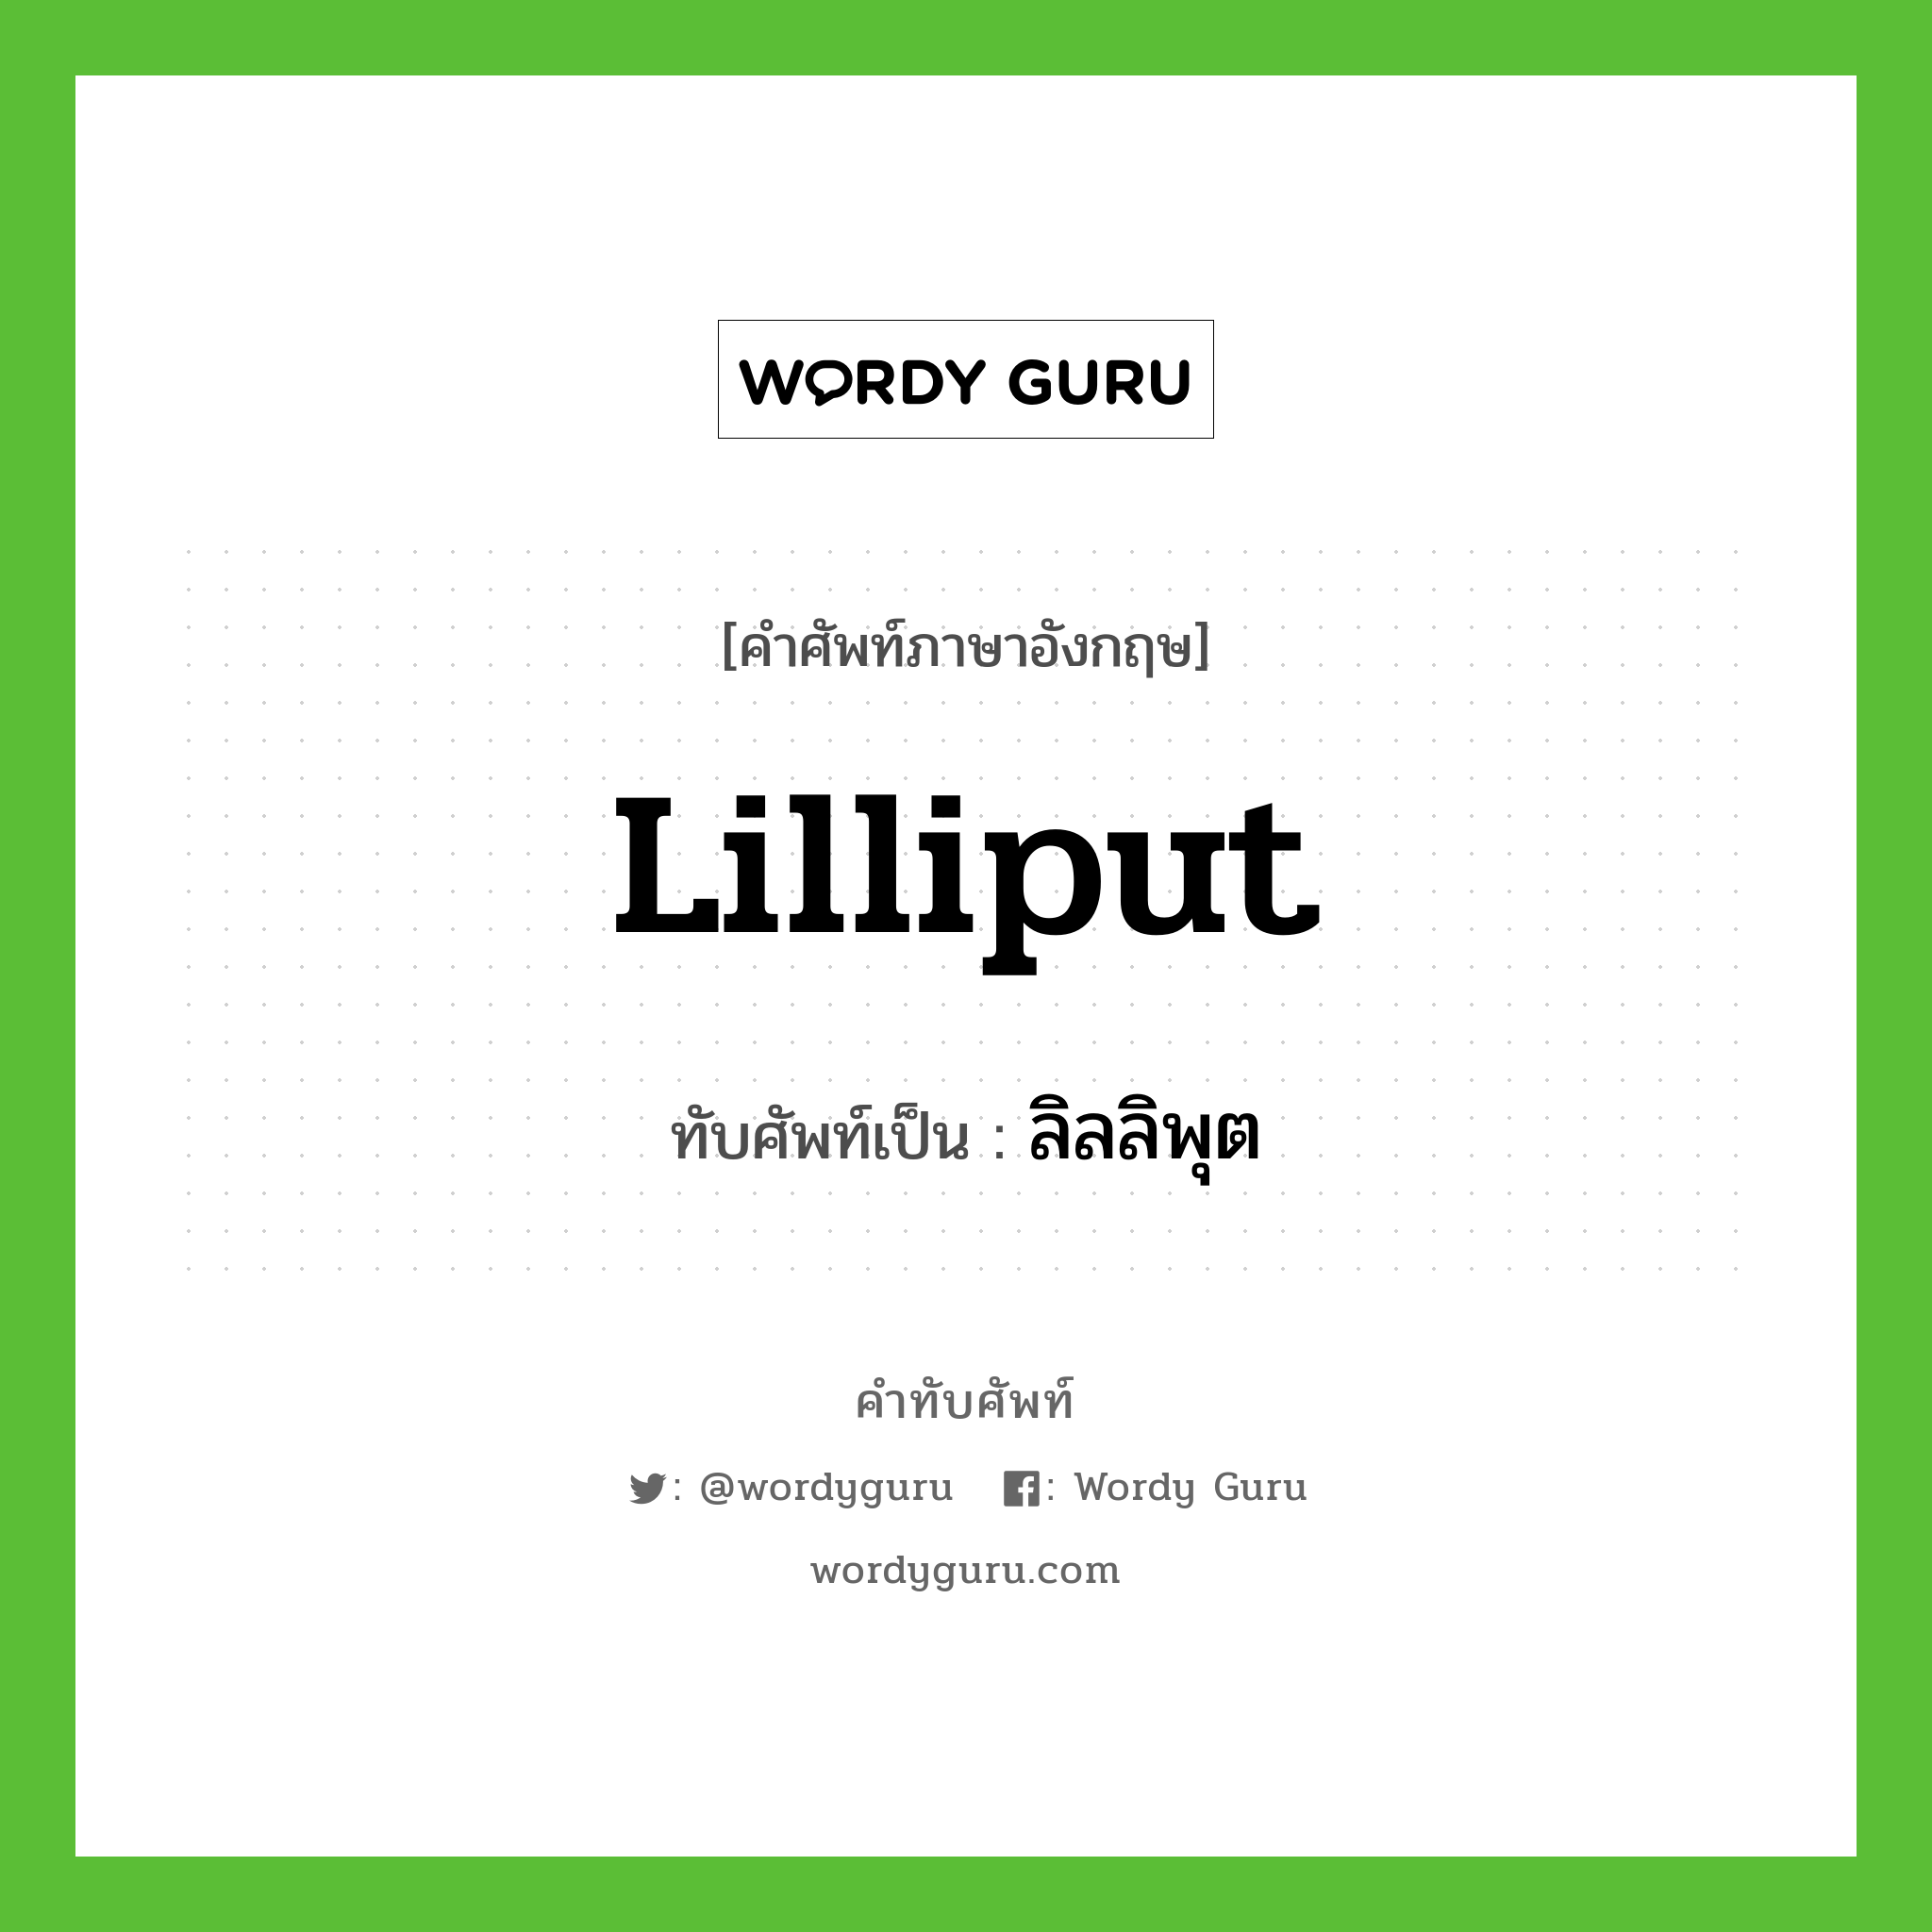 Lilliput เขียนเป็นคำไทยว่าอะไร?, คำศัพท์ภาษาอังกฤษ Lilliput ทับศัพท์เป็น ลิลลิพุต